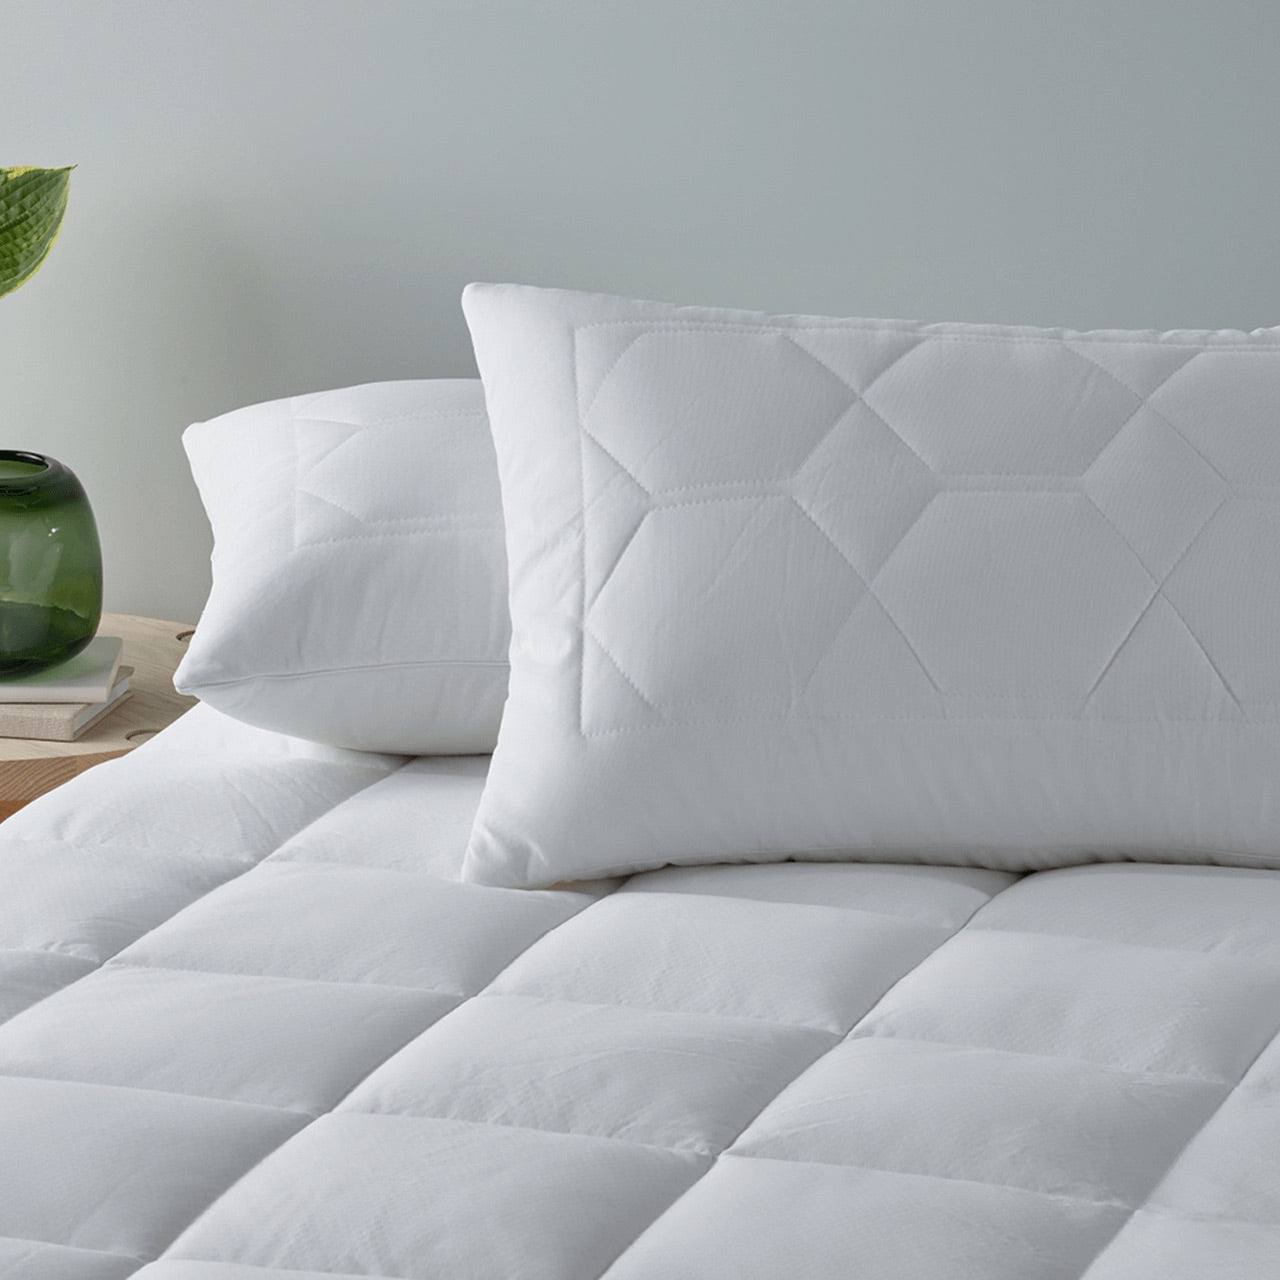 Thermal Balancing Pillow Protectors on pillows on a bed with Thermal Balancing Mattress Protector